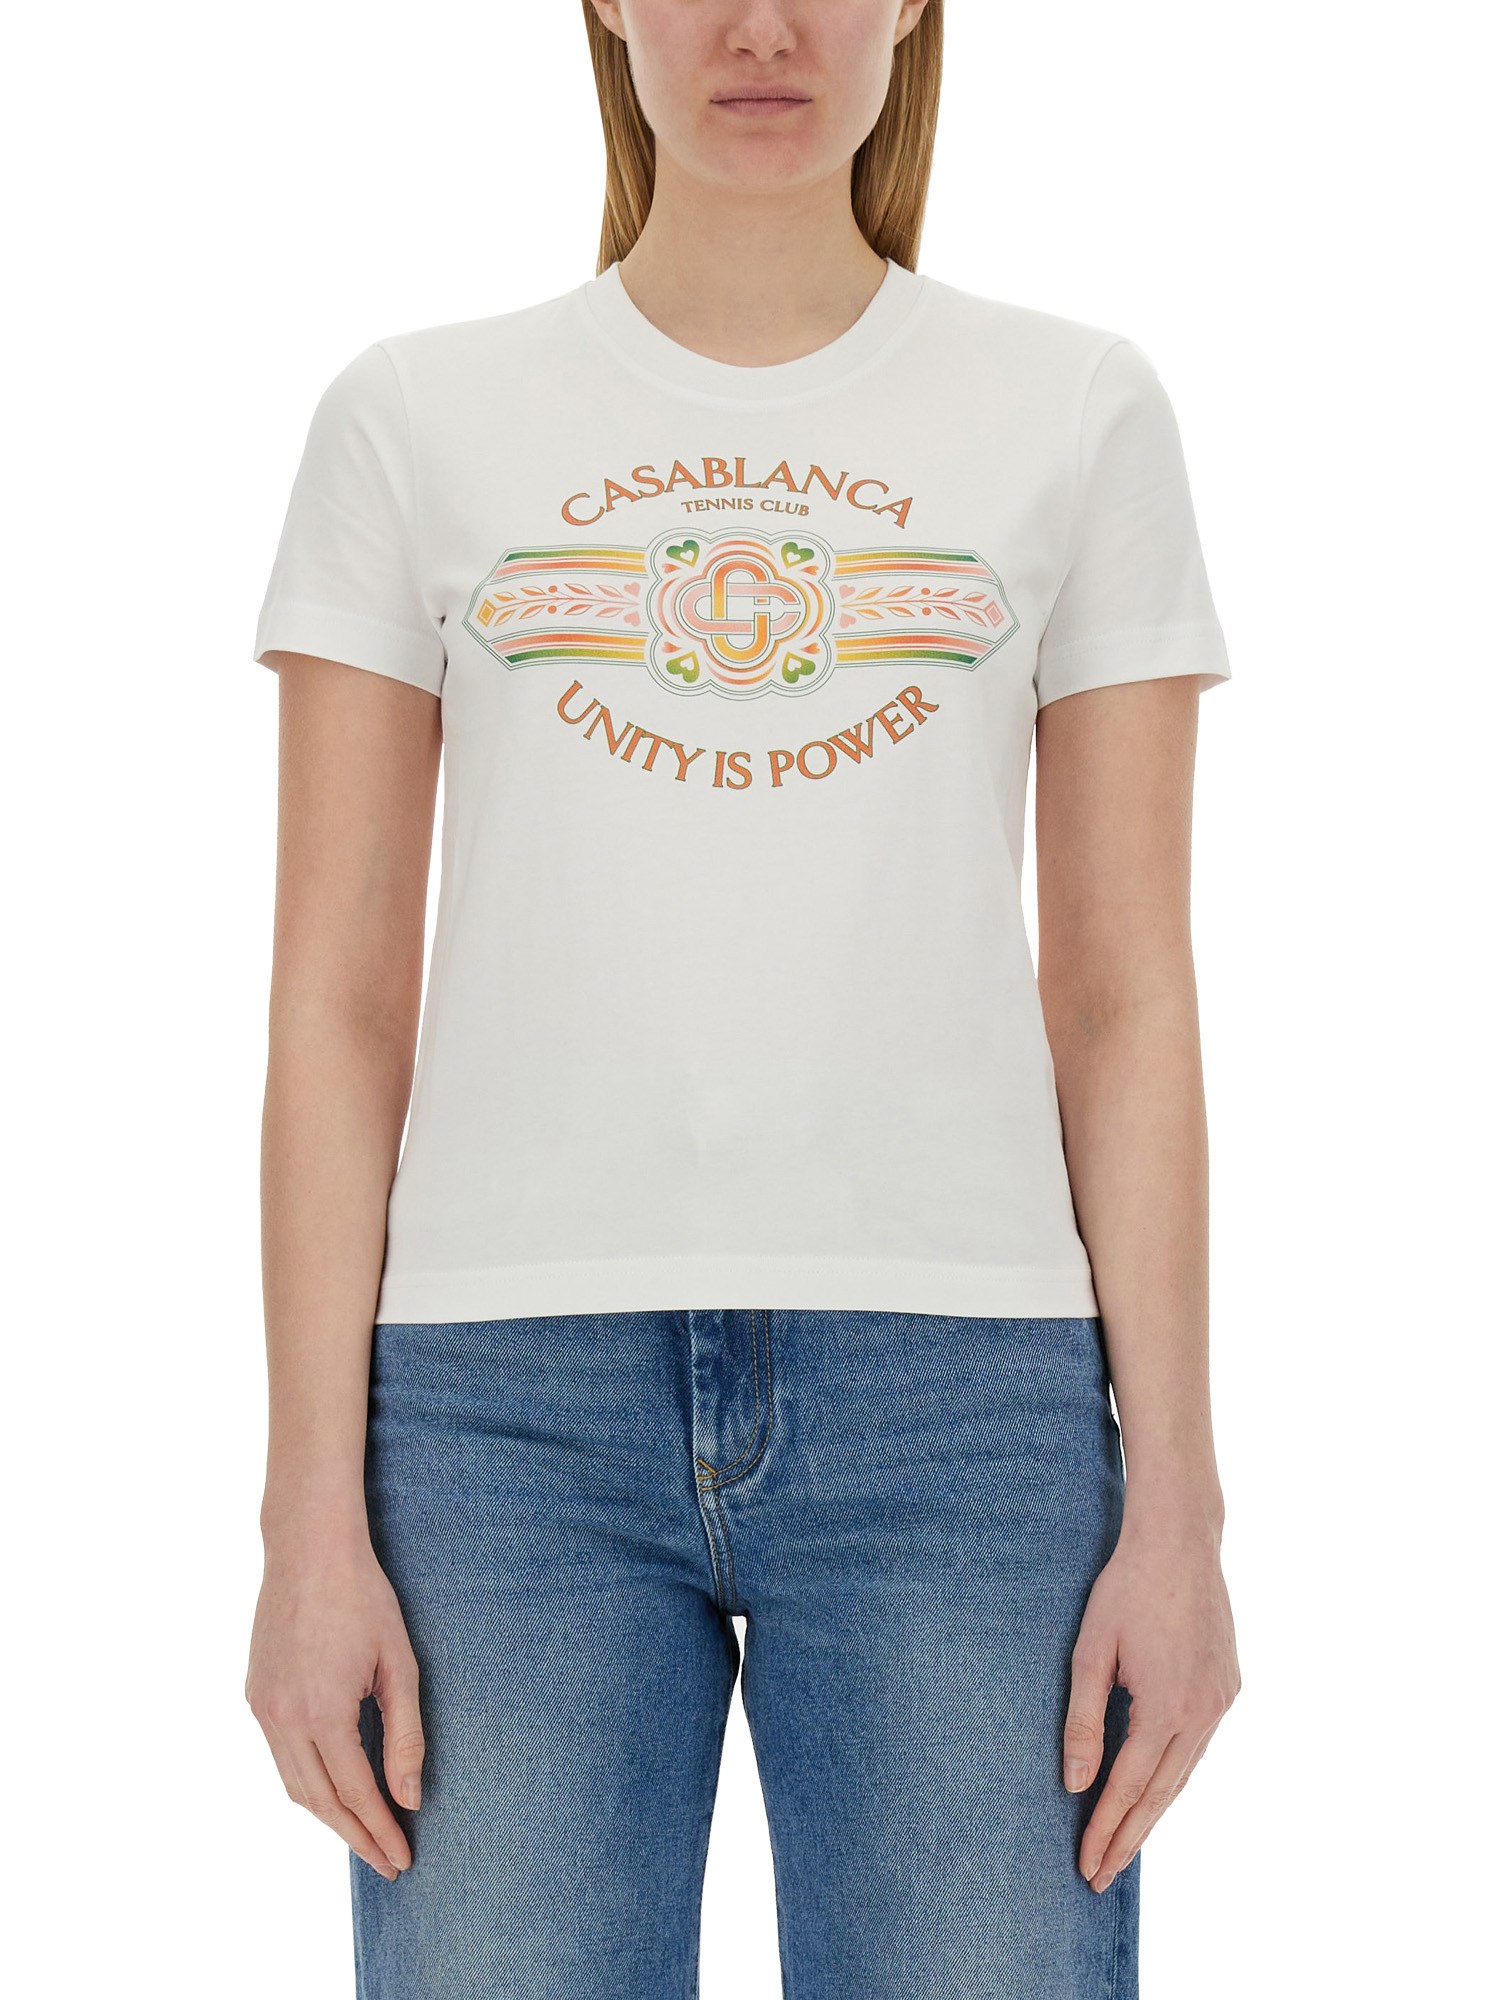 Casablanca casablanca t-shirt with print